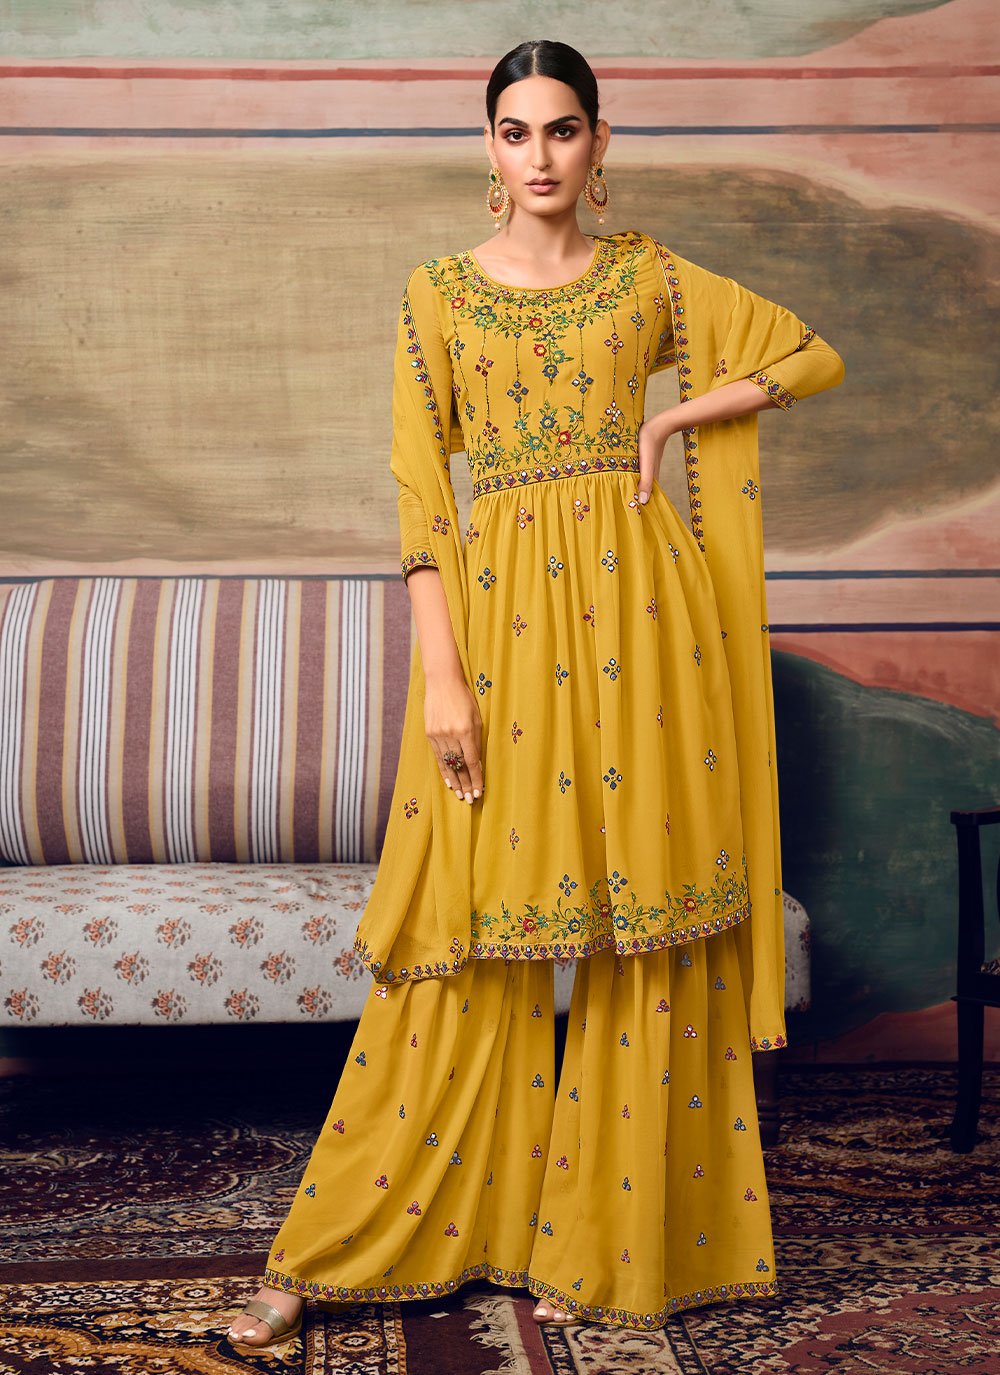 Georgette Embroidered Designer Pakistani Suit in Mustard